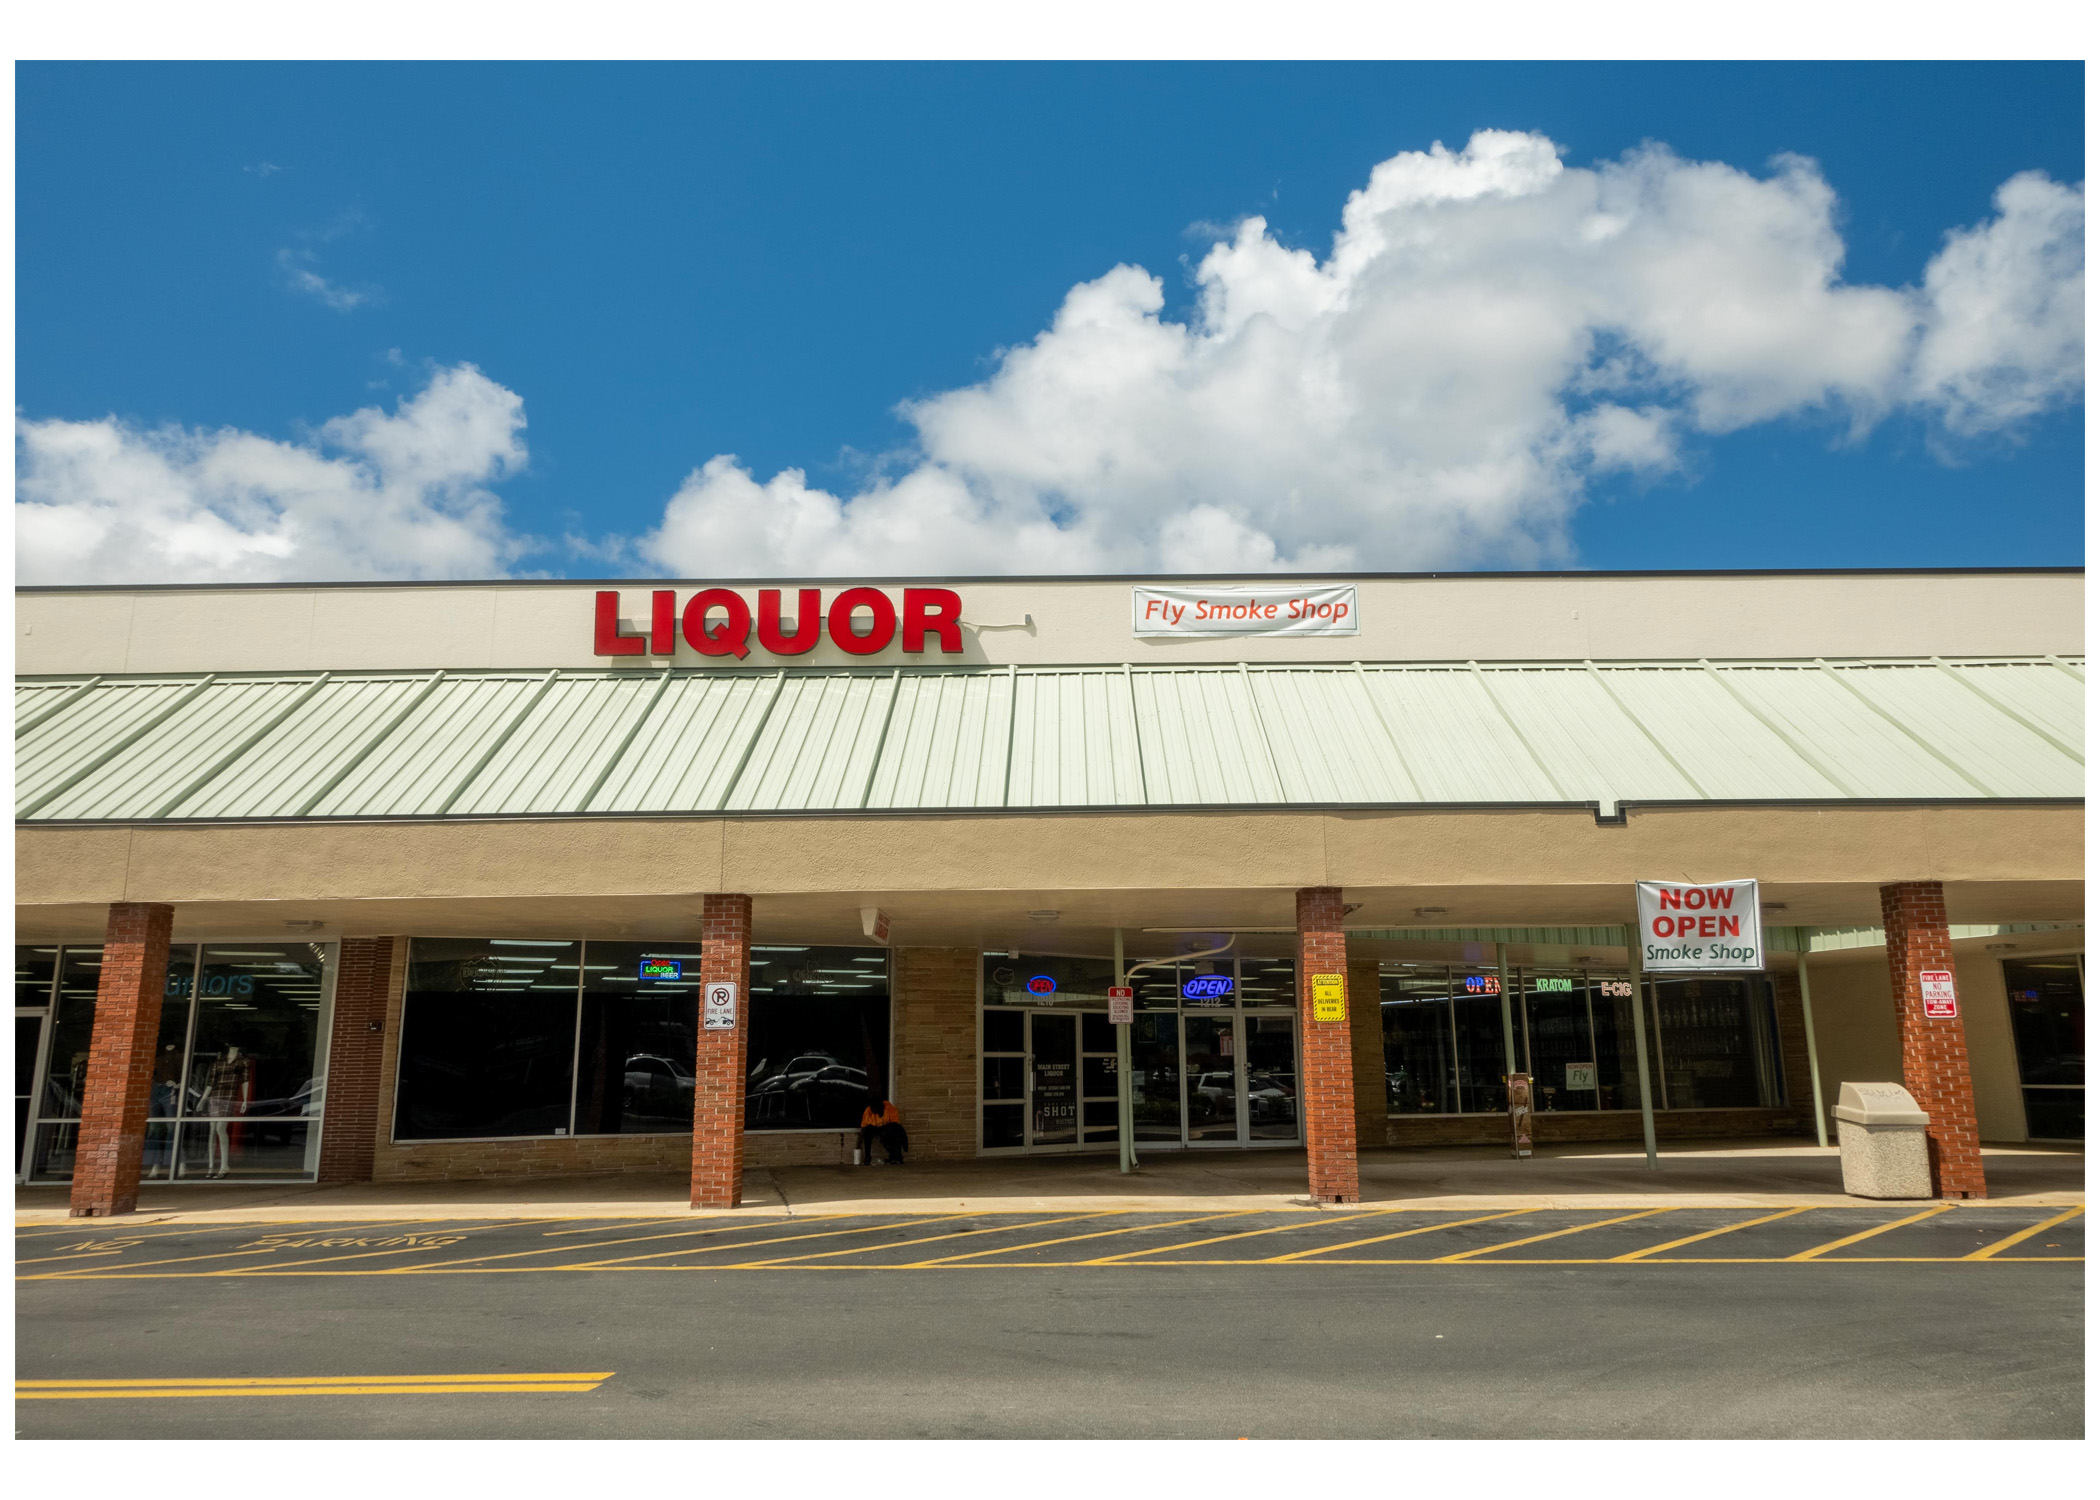 Gainesville Shopping Center, Liquor and Fly Smoke Shop